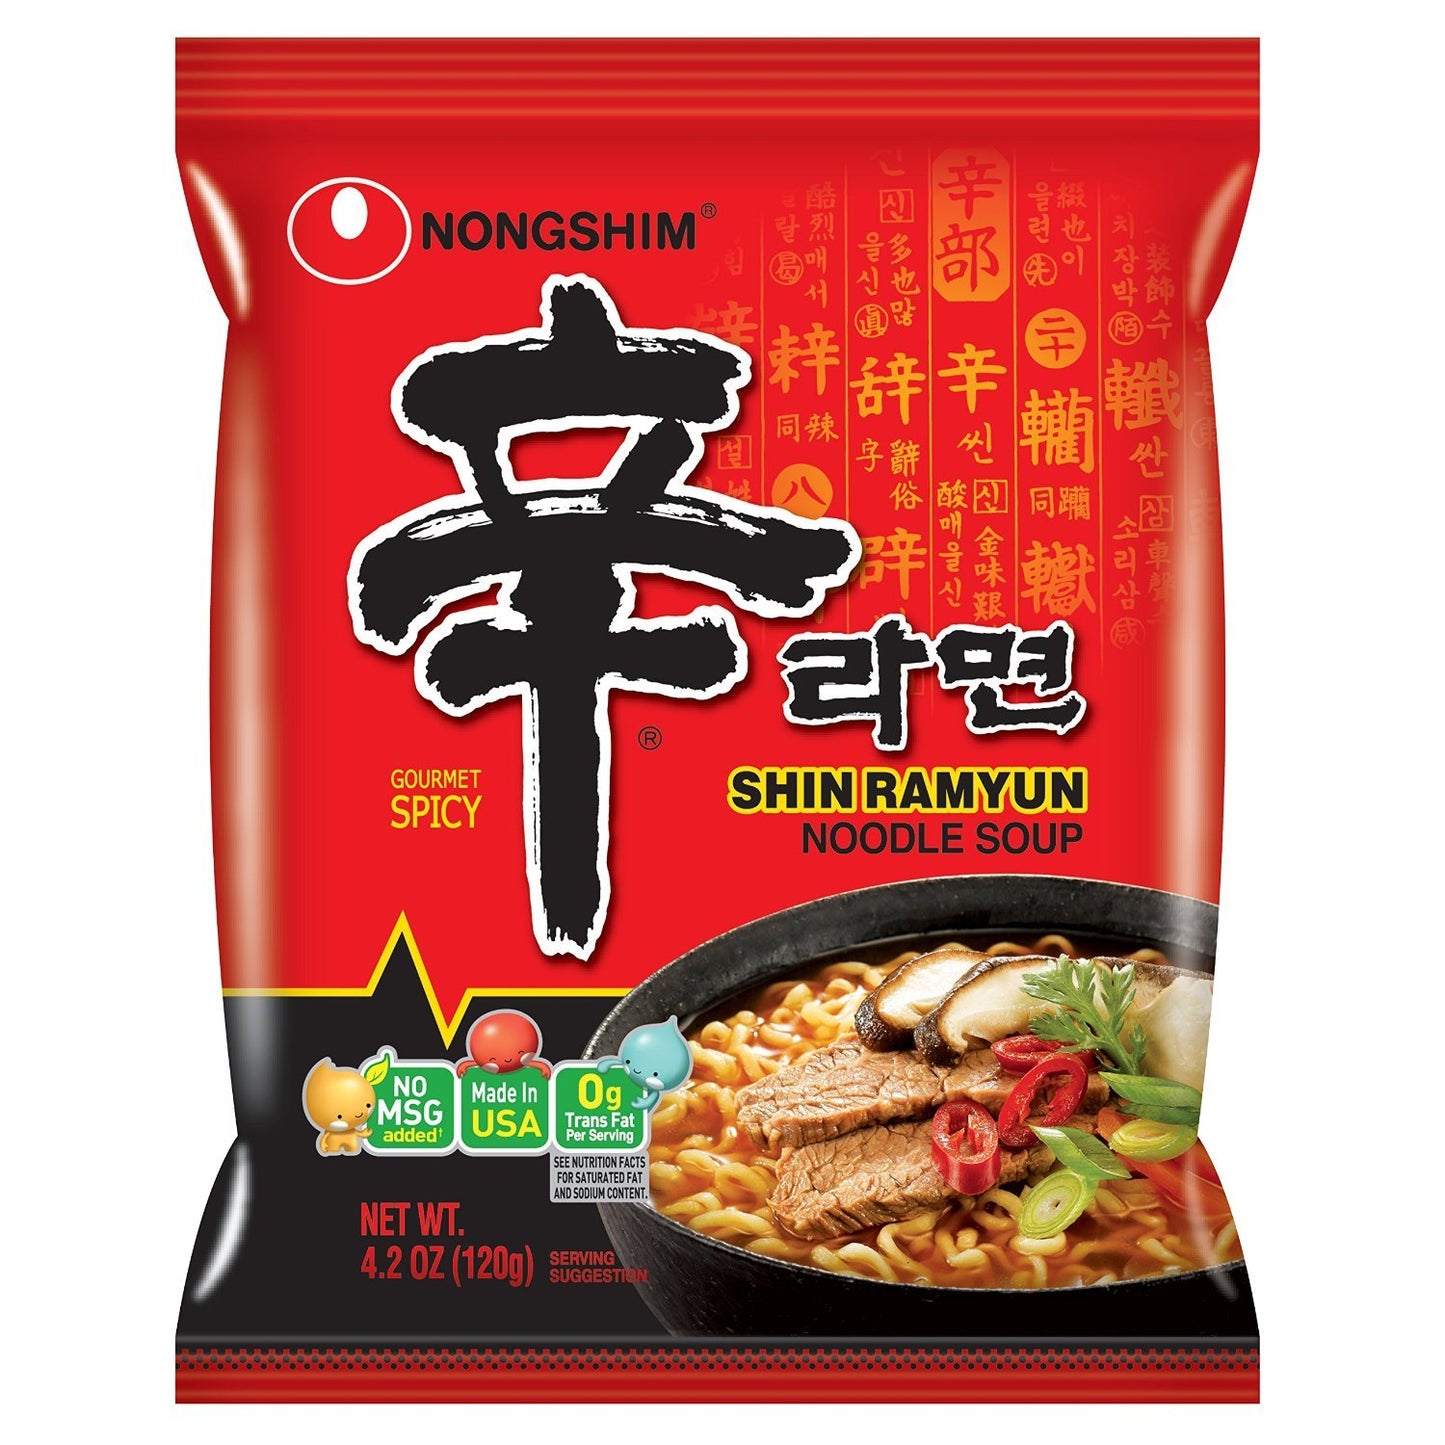 Nongshim Gourmet Spicy Shin Instant Ramen Noodle, 20 Pack, Chunky Vegetables, Premium Microwaveable Ramen Soup Mix, Savory & Rich